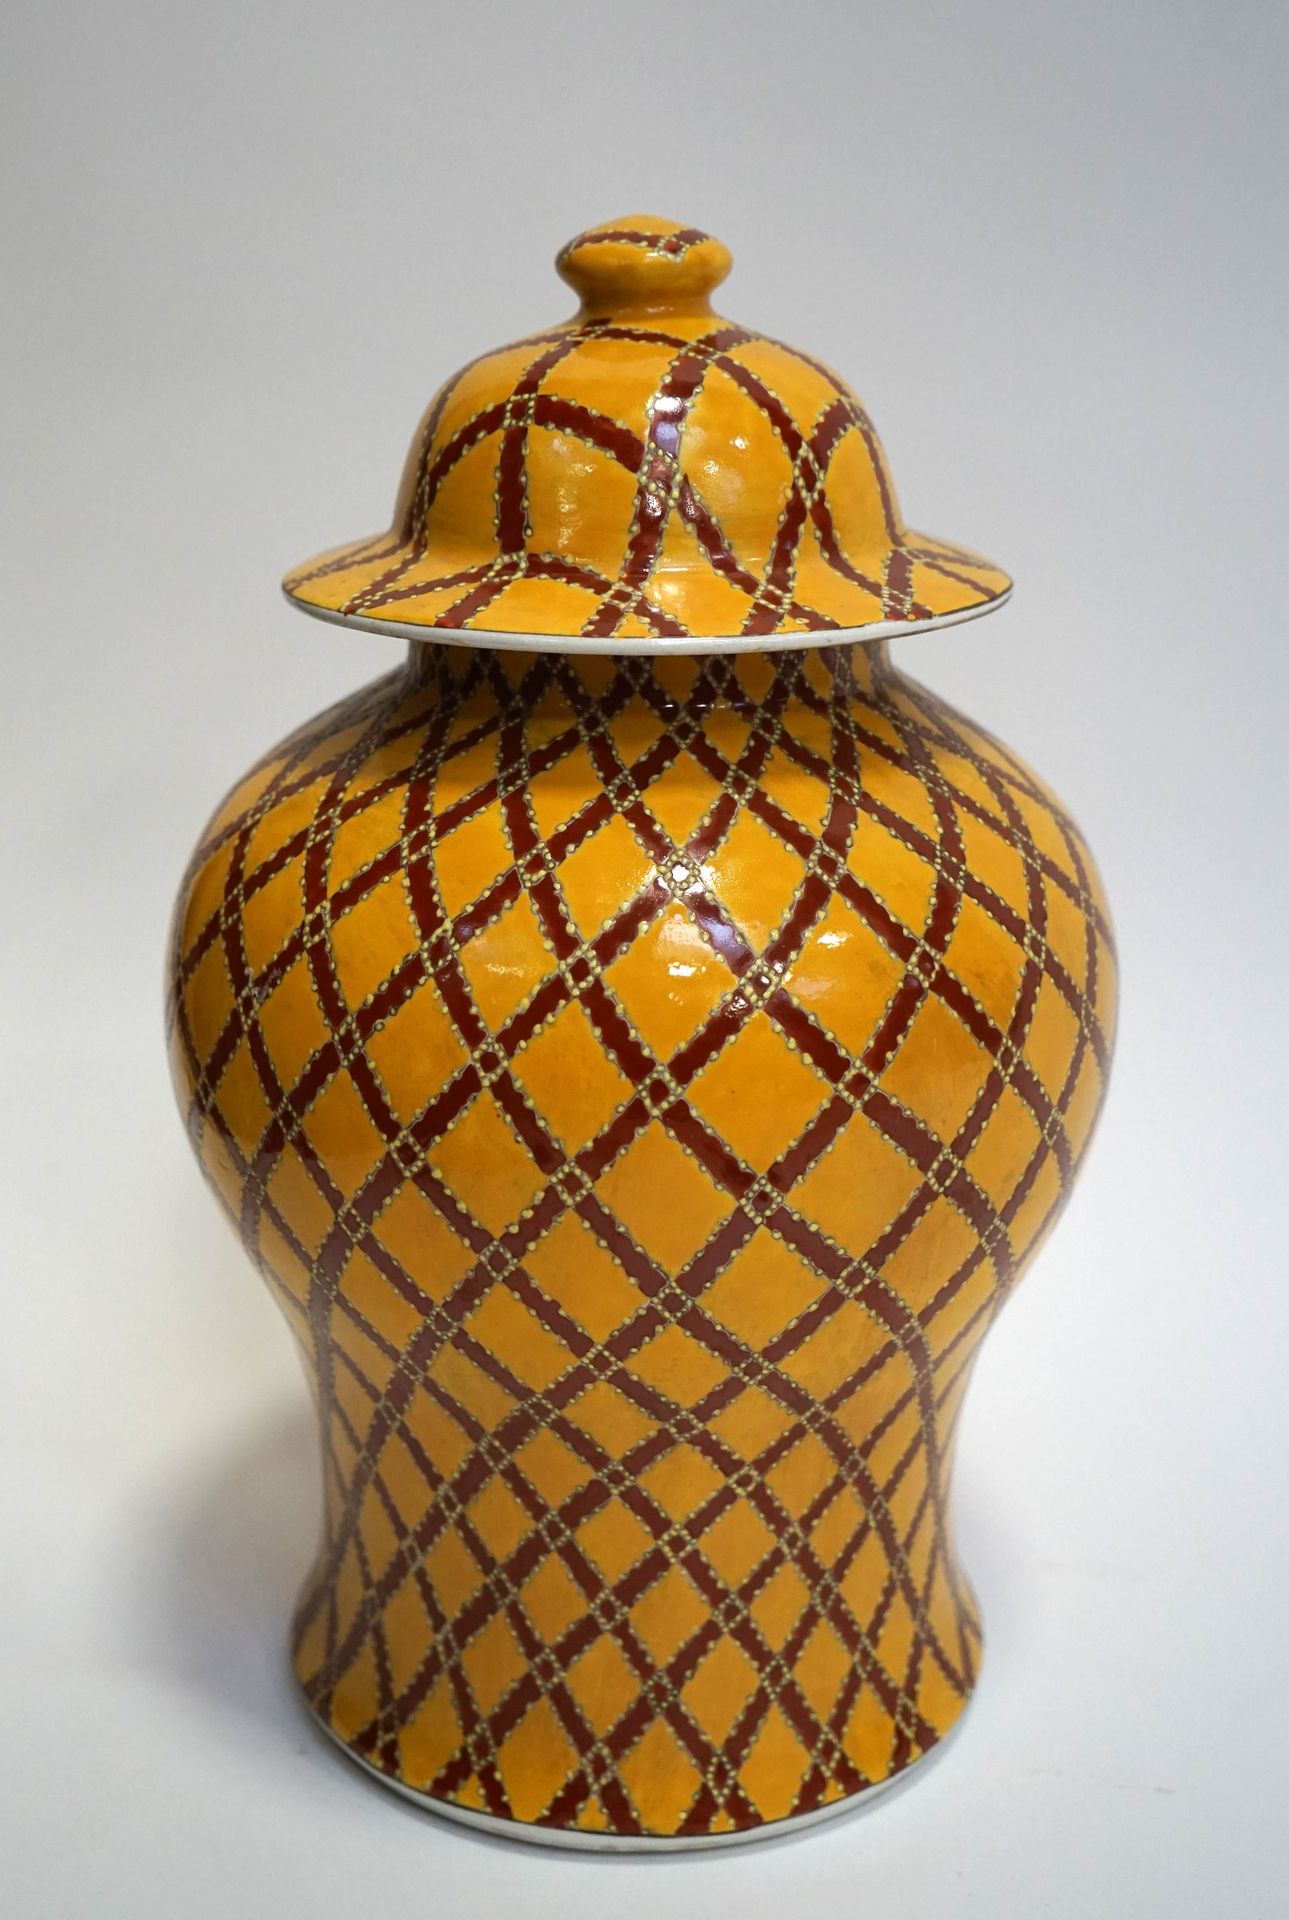 Null 中国。一个黄底钻石装饰的大瓷盖花瓶。高43厘米。